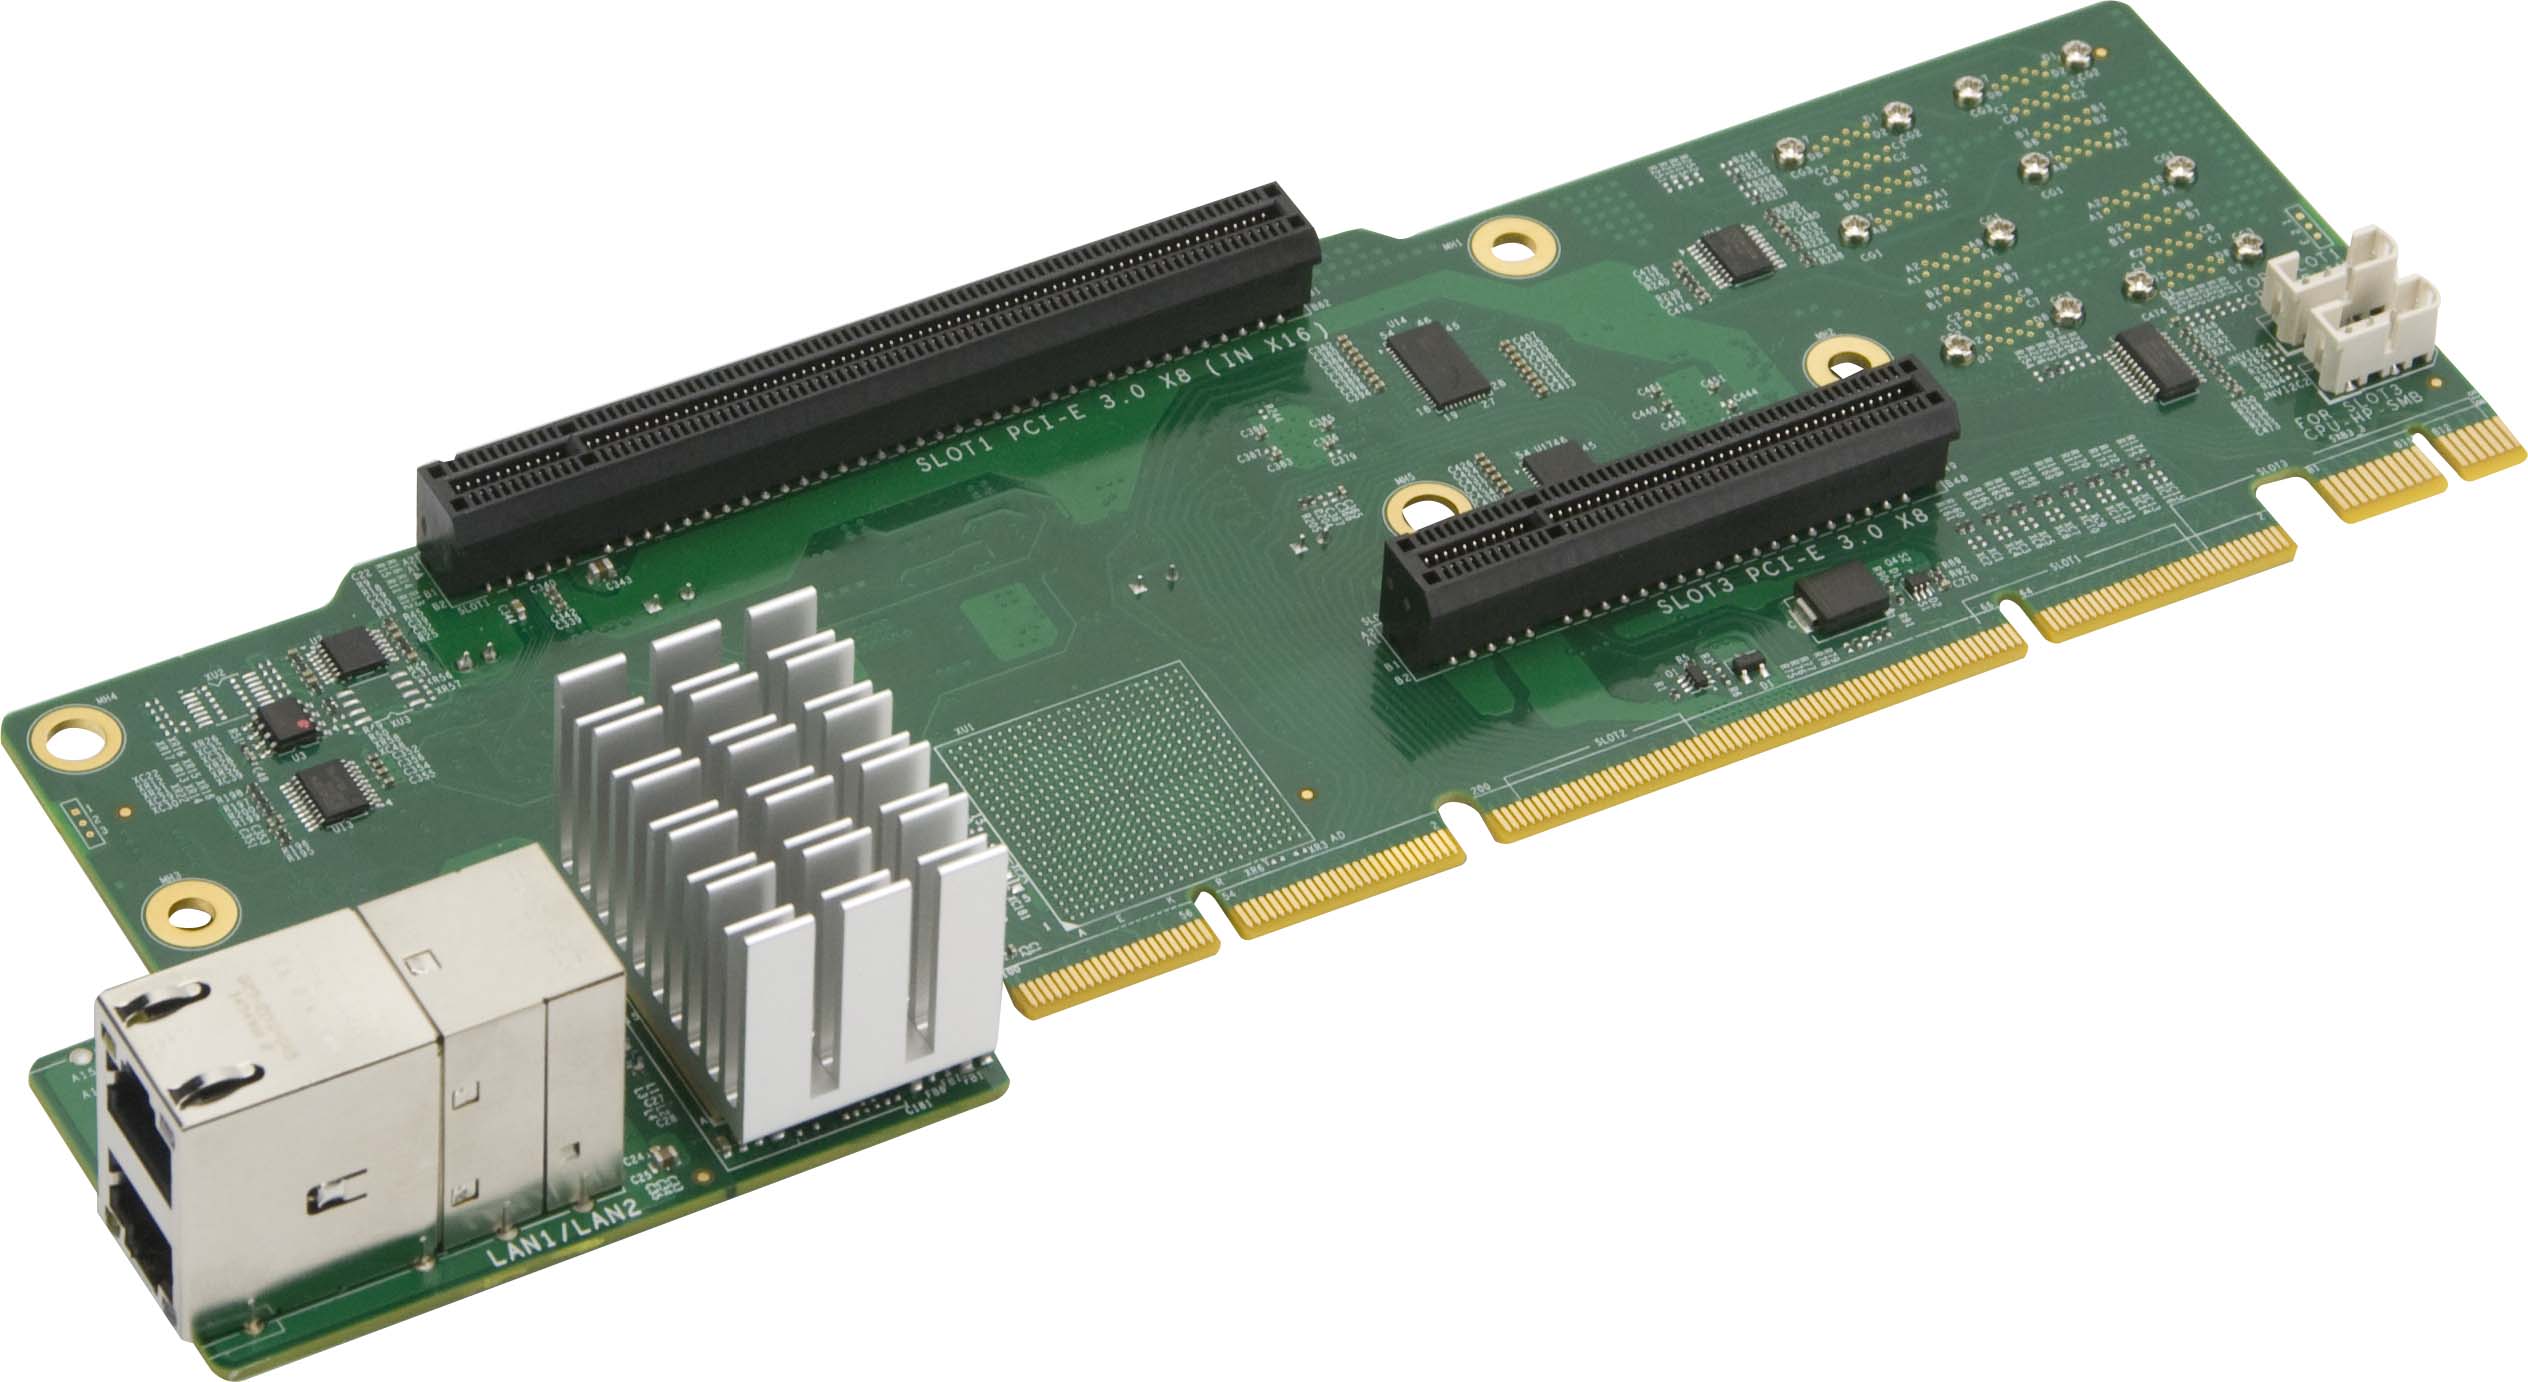 Supermicro AOC-2UR68-I4G 1U Ultra Tarjeta Vertical 4-Puerto PCI-E 3.0 x16 1GbE Intel I350 